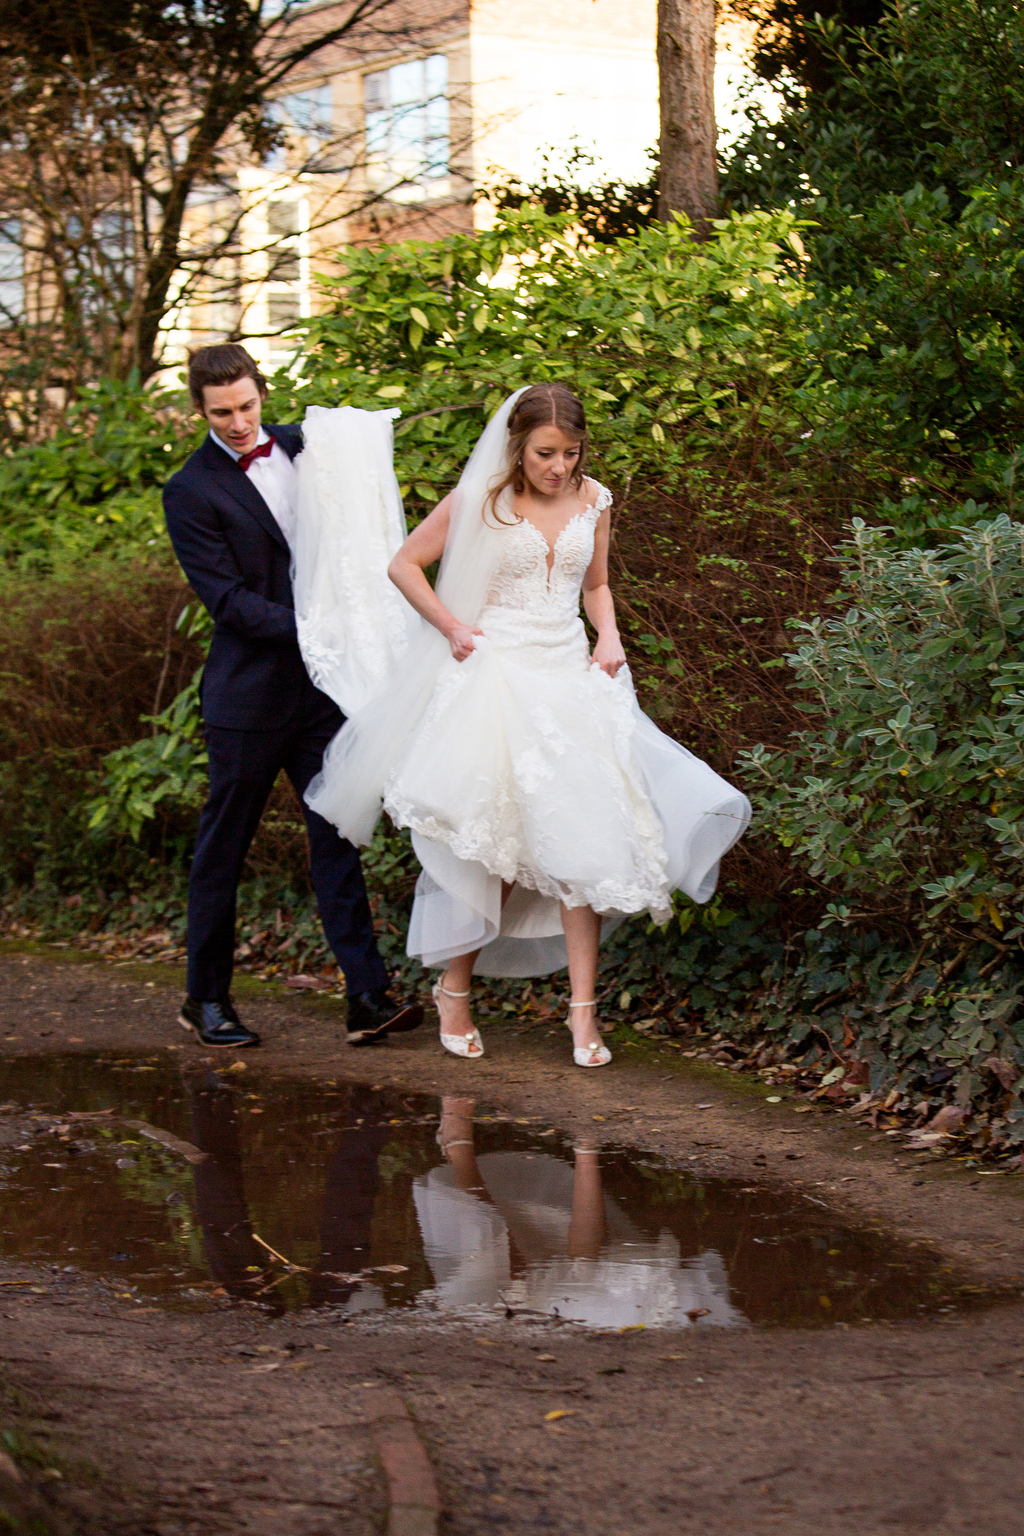 Real wedding in 2020 by Bristol wedding photographer Martin Dabek on English-Wedding.com